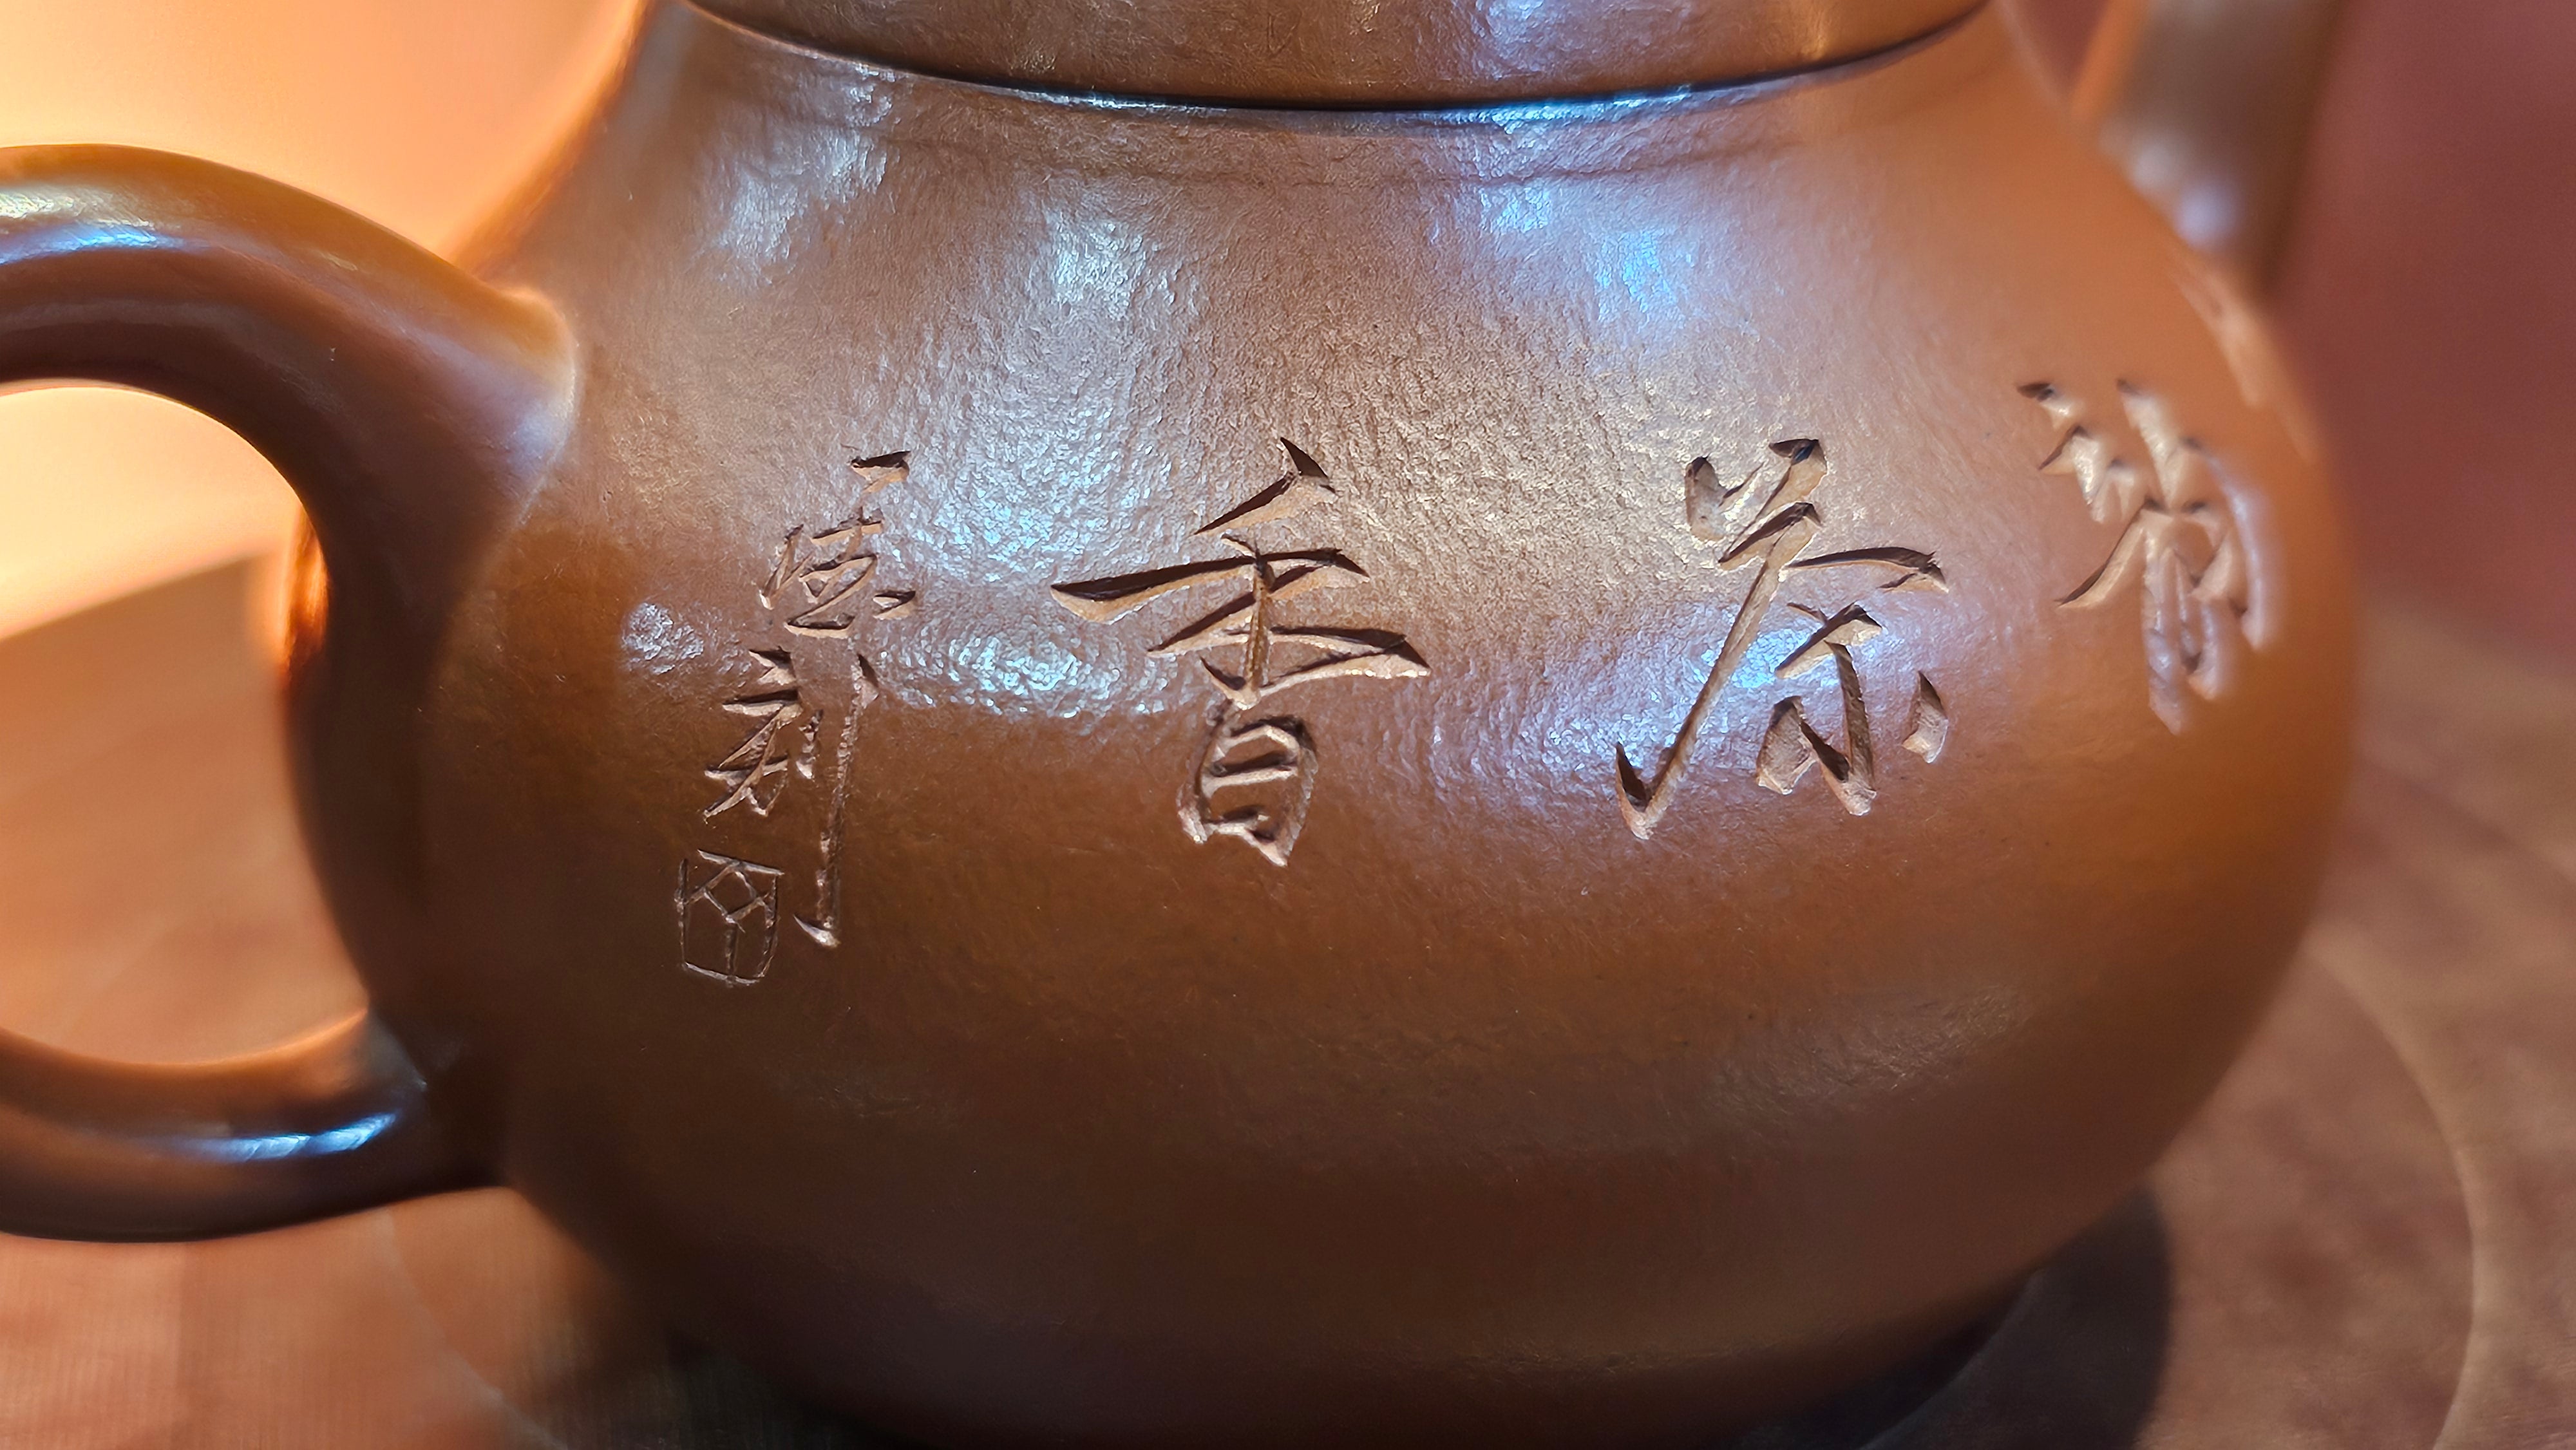 Li Xing 梨形, 173.7ml, Xiao Mei Yao Zhu Ni 小煤窑朱泥, by Craftsman Wang Xing 王兴, Engraving by Craftsman Ding Tie Ping 丁铁平 (Artistic Byname 一德).